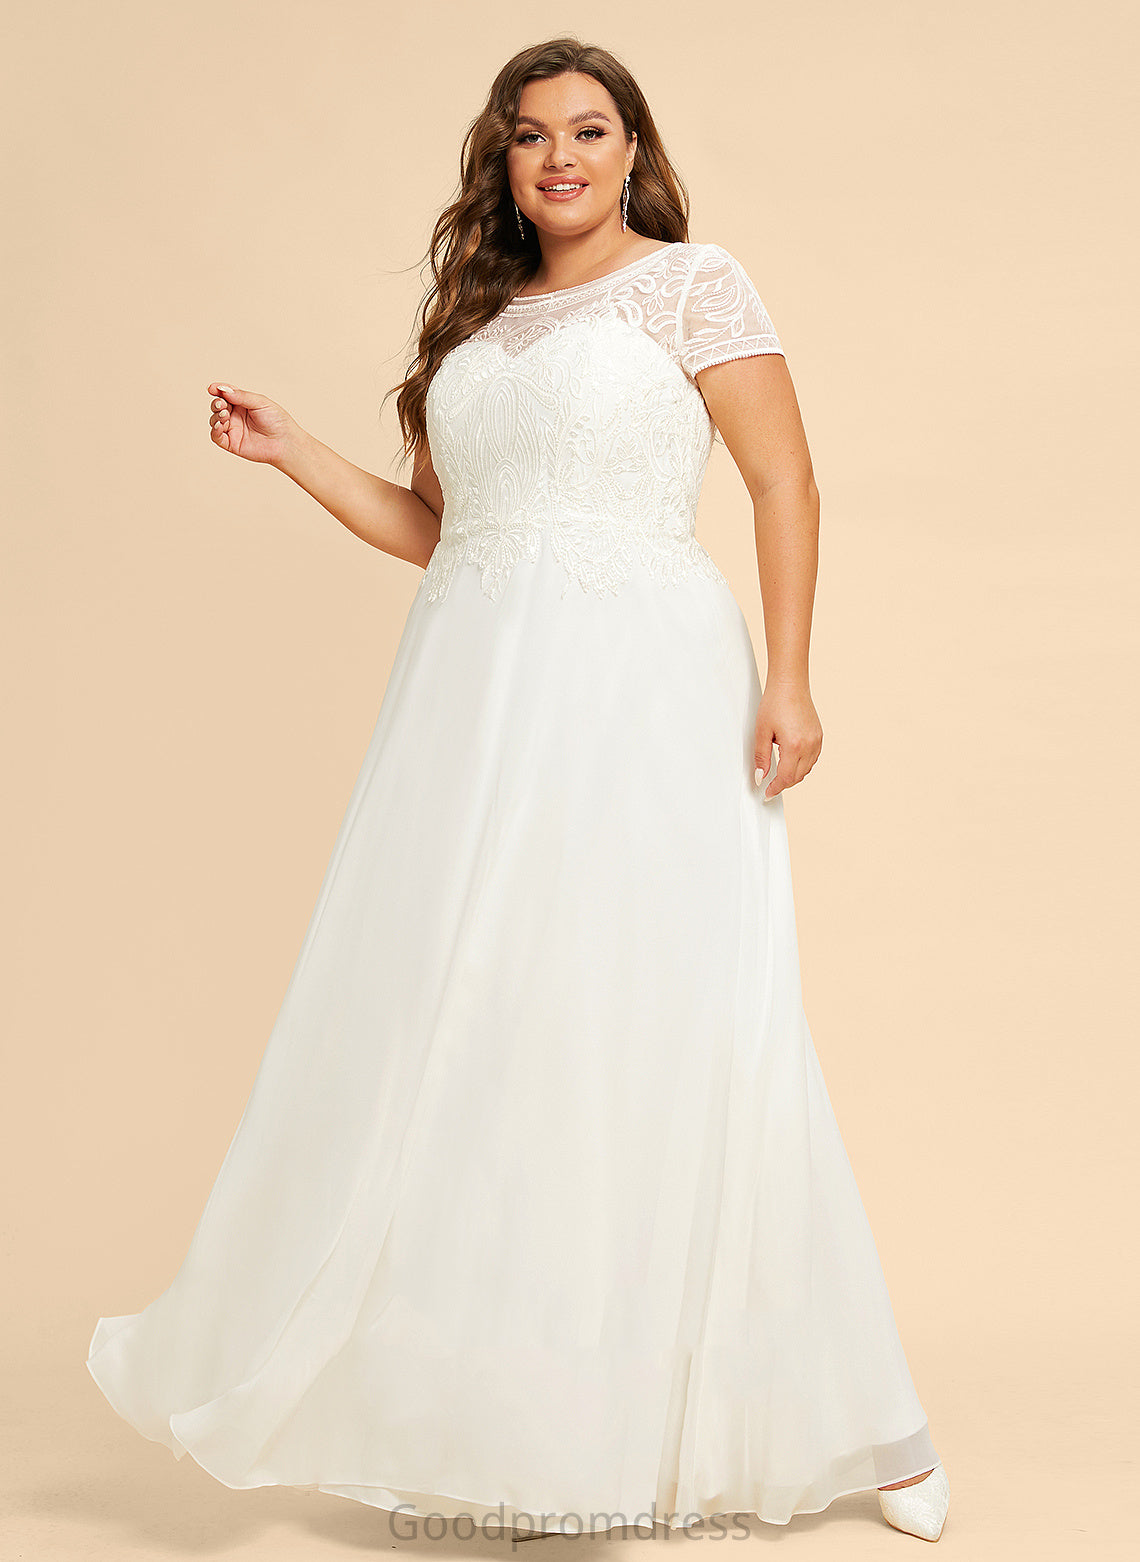 Scoop With Sequins Wedding Dresses Chiffon Dress Floor-Length Lace Wedding Paula